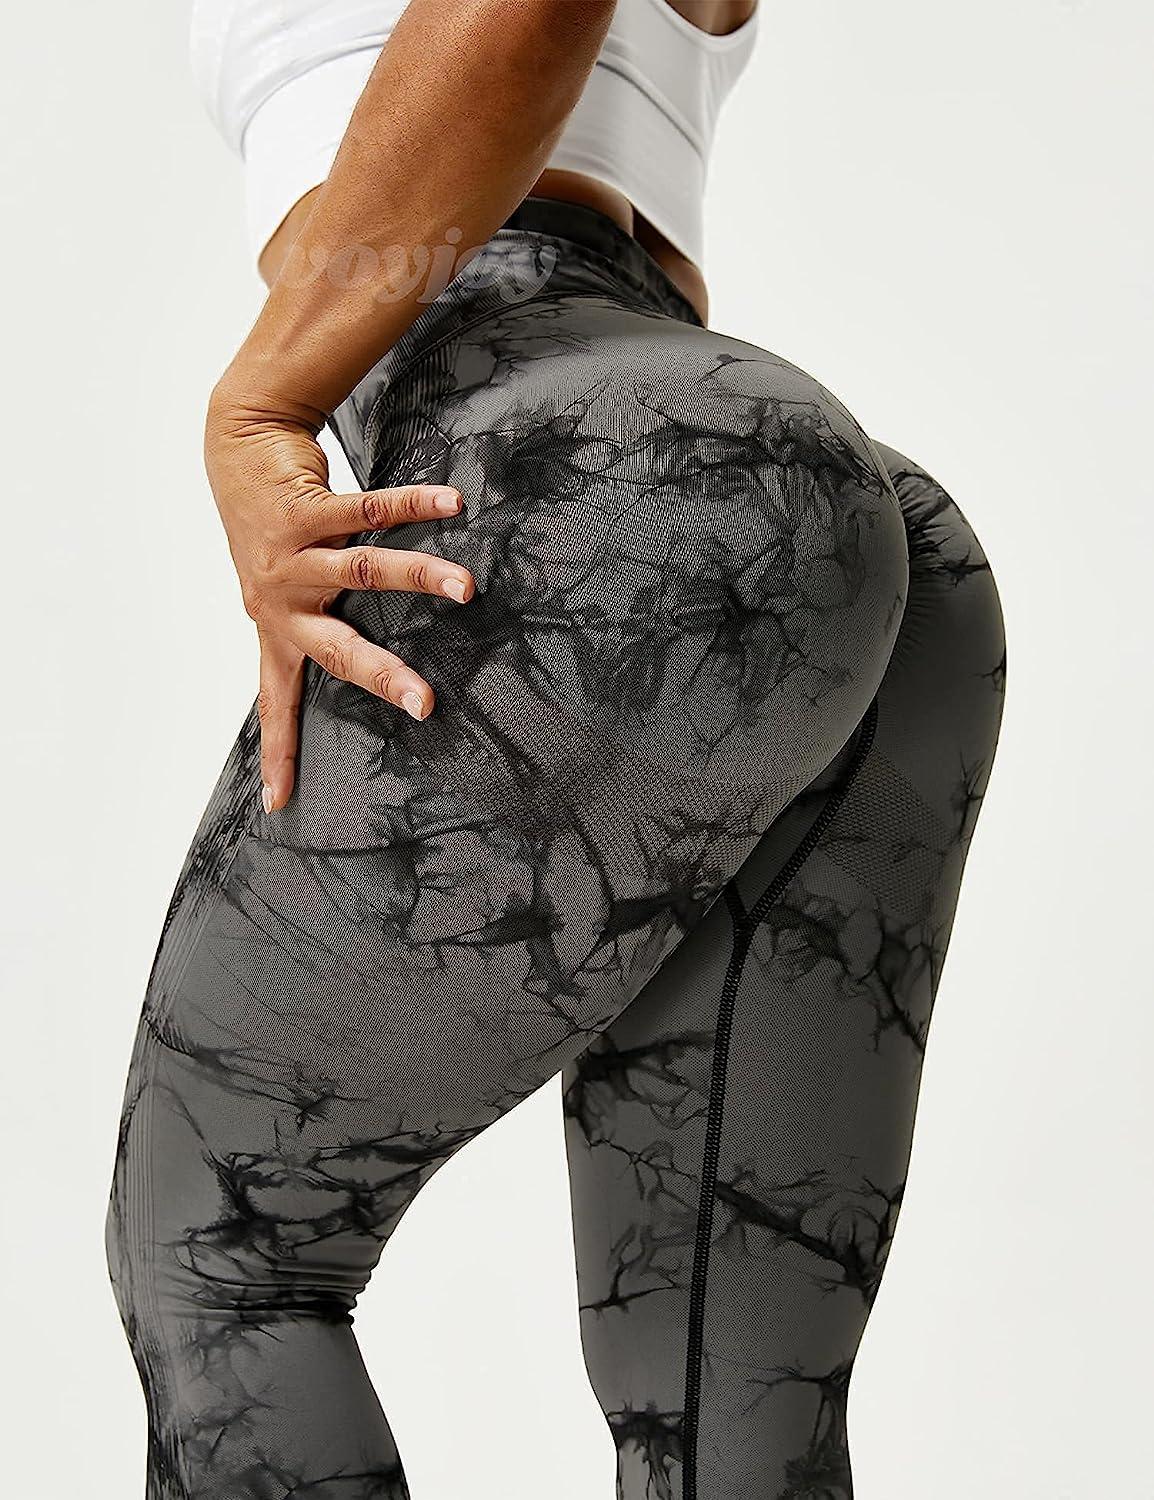 VOYJOY Tie Dye Seamless Leggings for Women High Waist Yoga Pants, Scrunch  Butt Lifting Elastic Tights Black Gray Medium